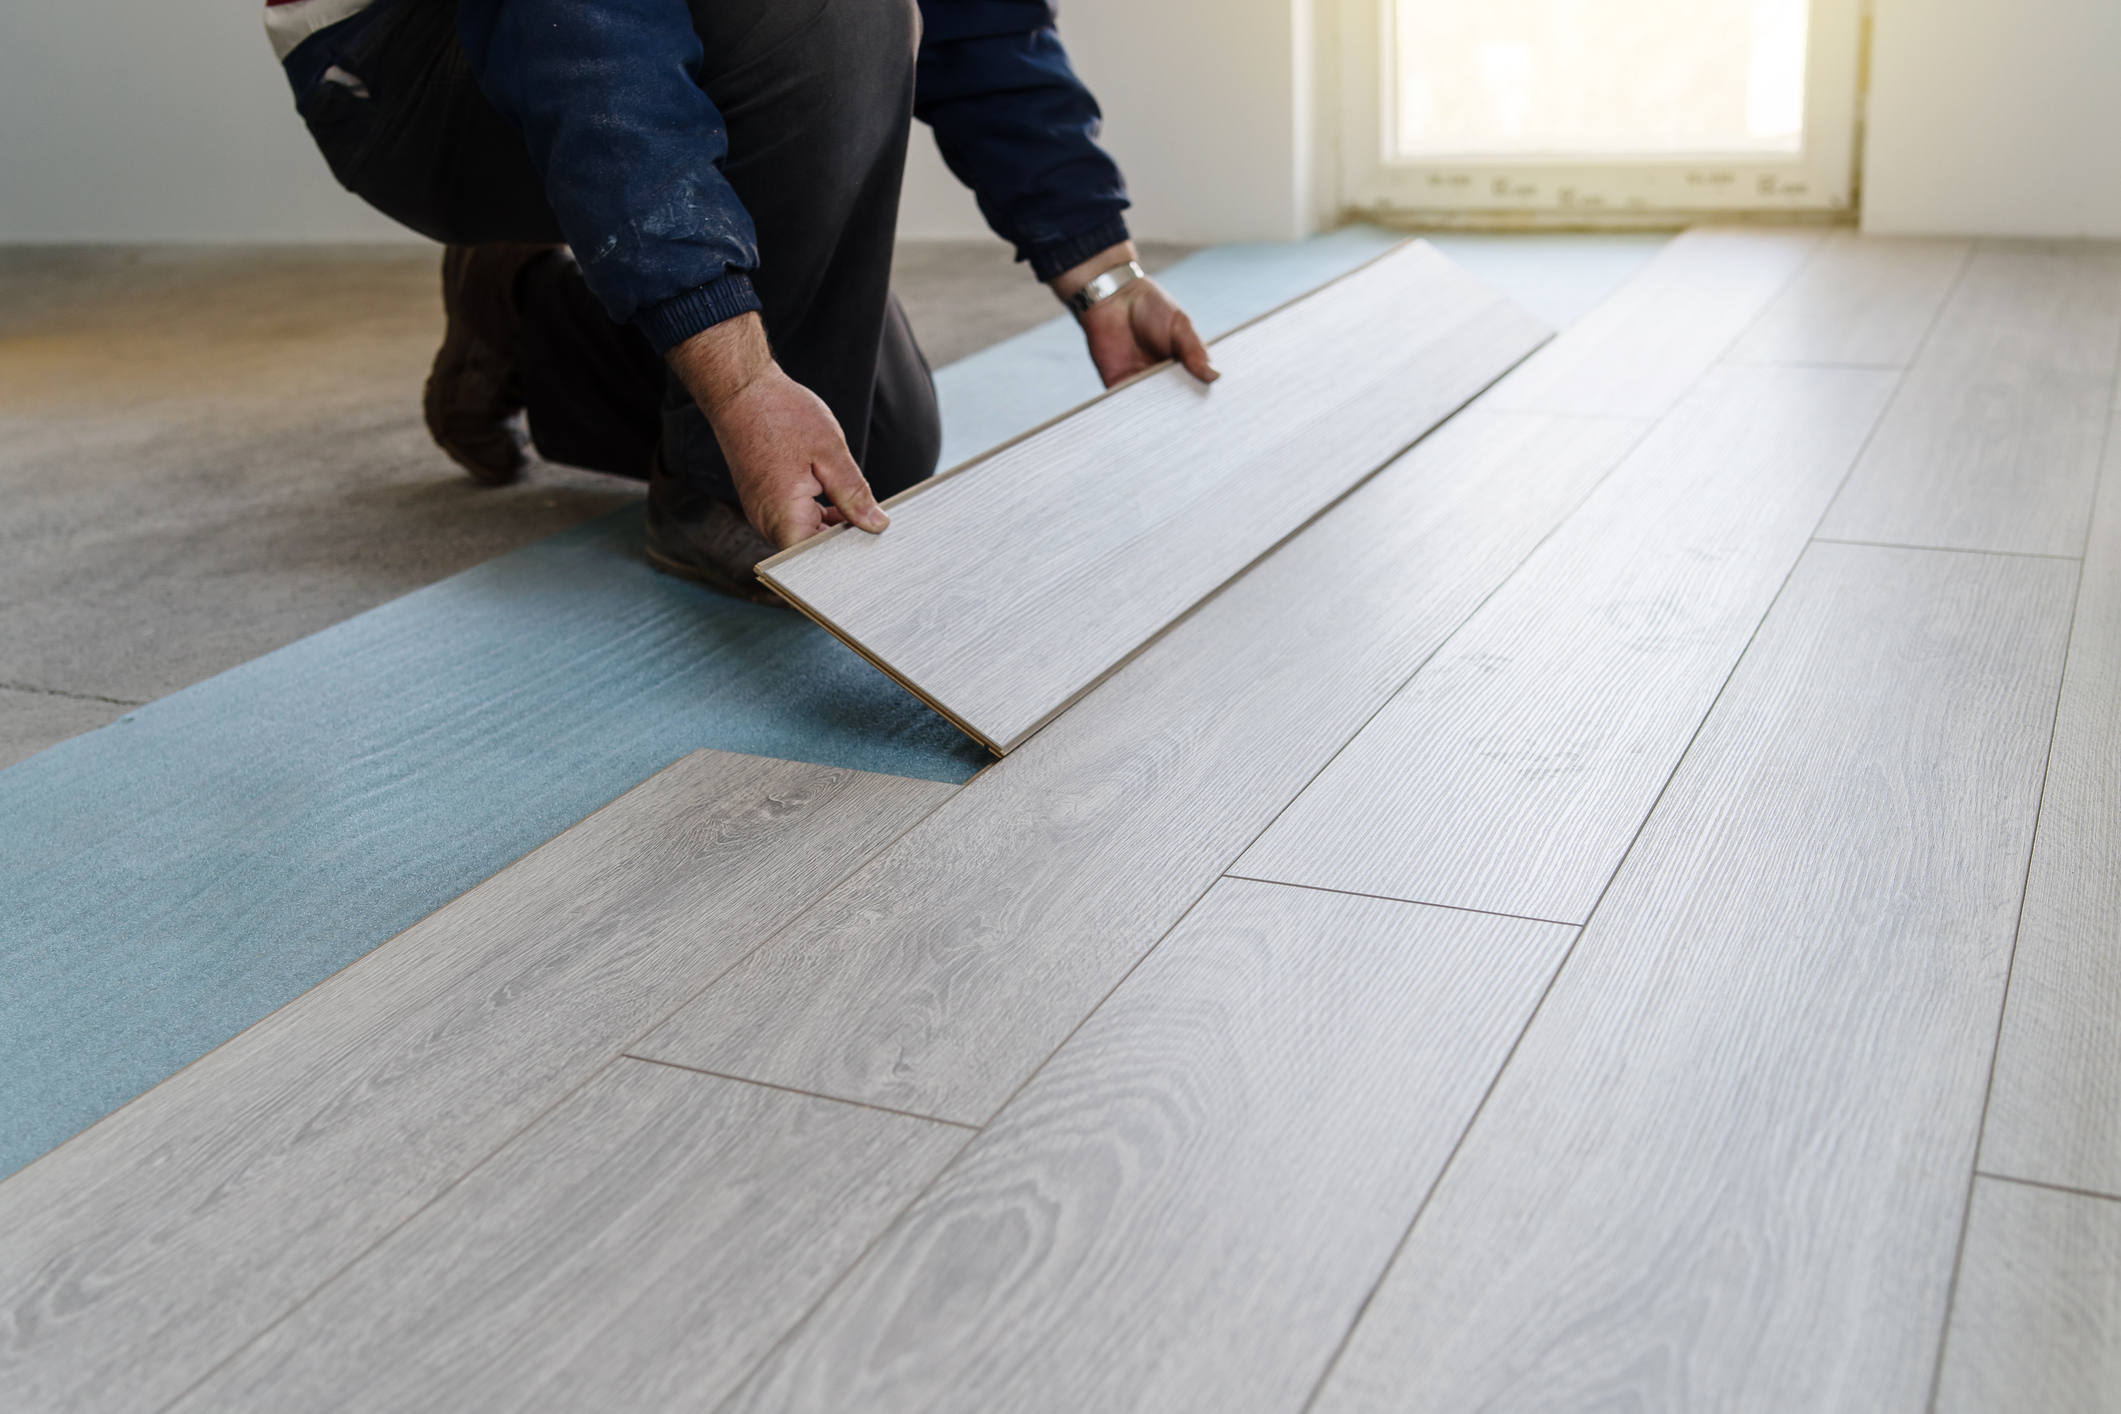 Easy Temporary Flooring Ideas, Do I Need A Permit For Wood Flooring